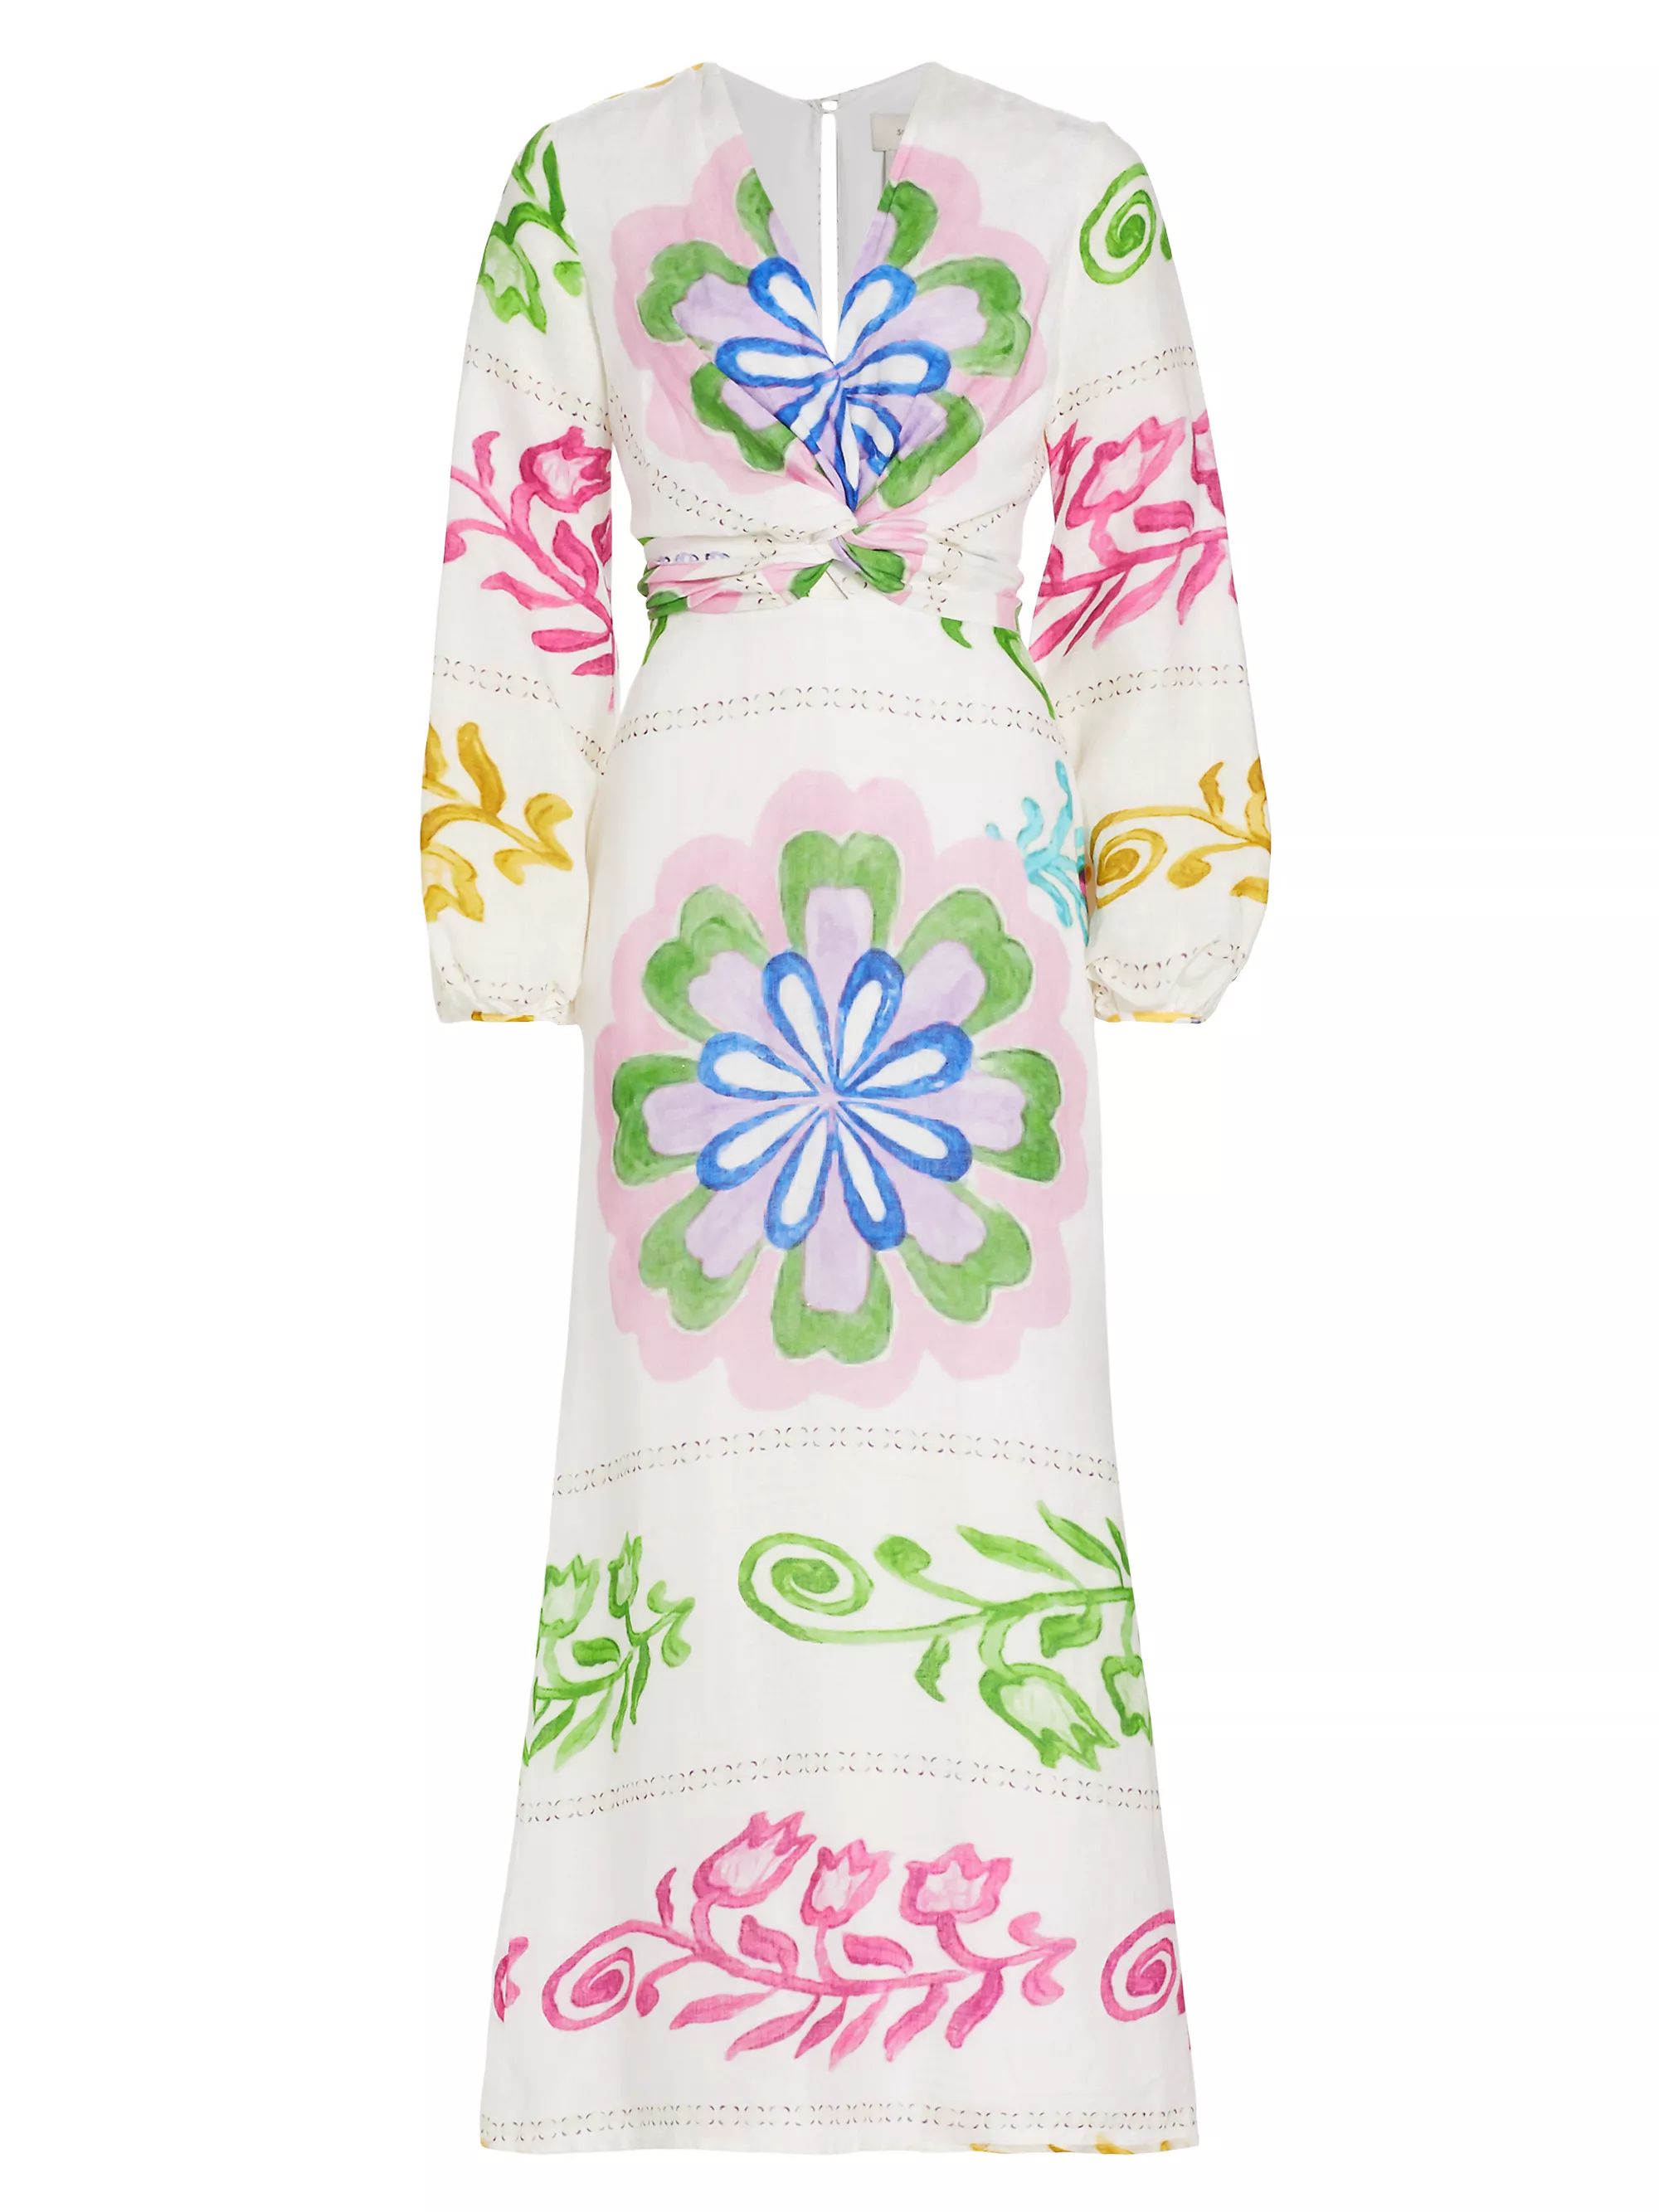 Multicolor Floral PrintAll MaxiSilvia TcherassiBattia Twisted Linen Maxi Dress$990
            
 ... | Saks Fifth Avenue